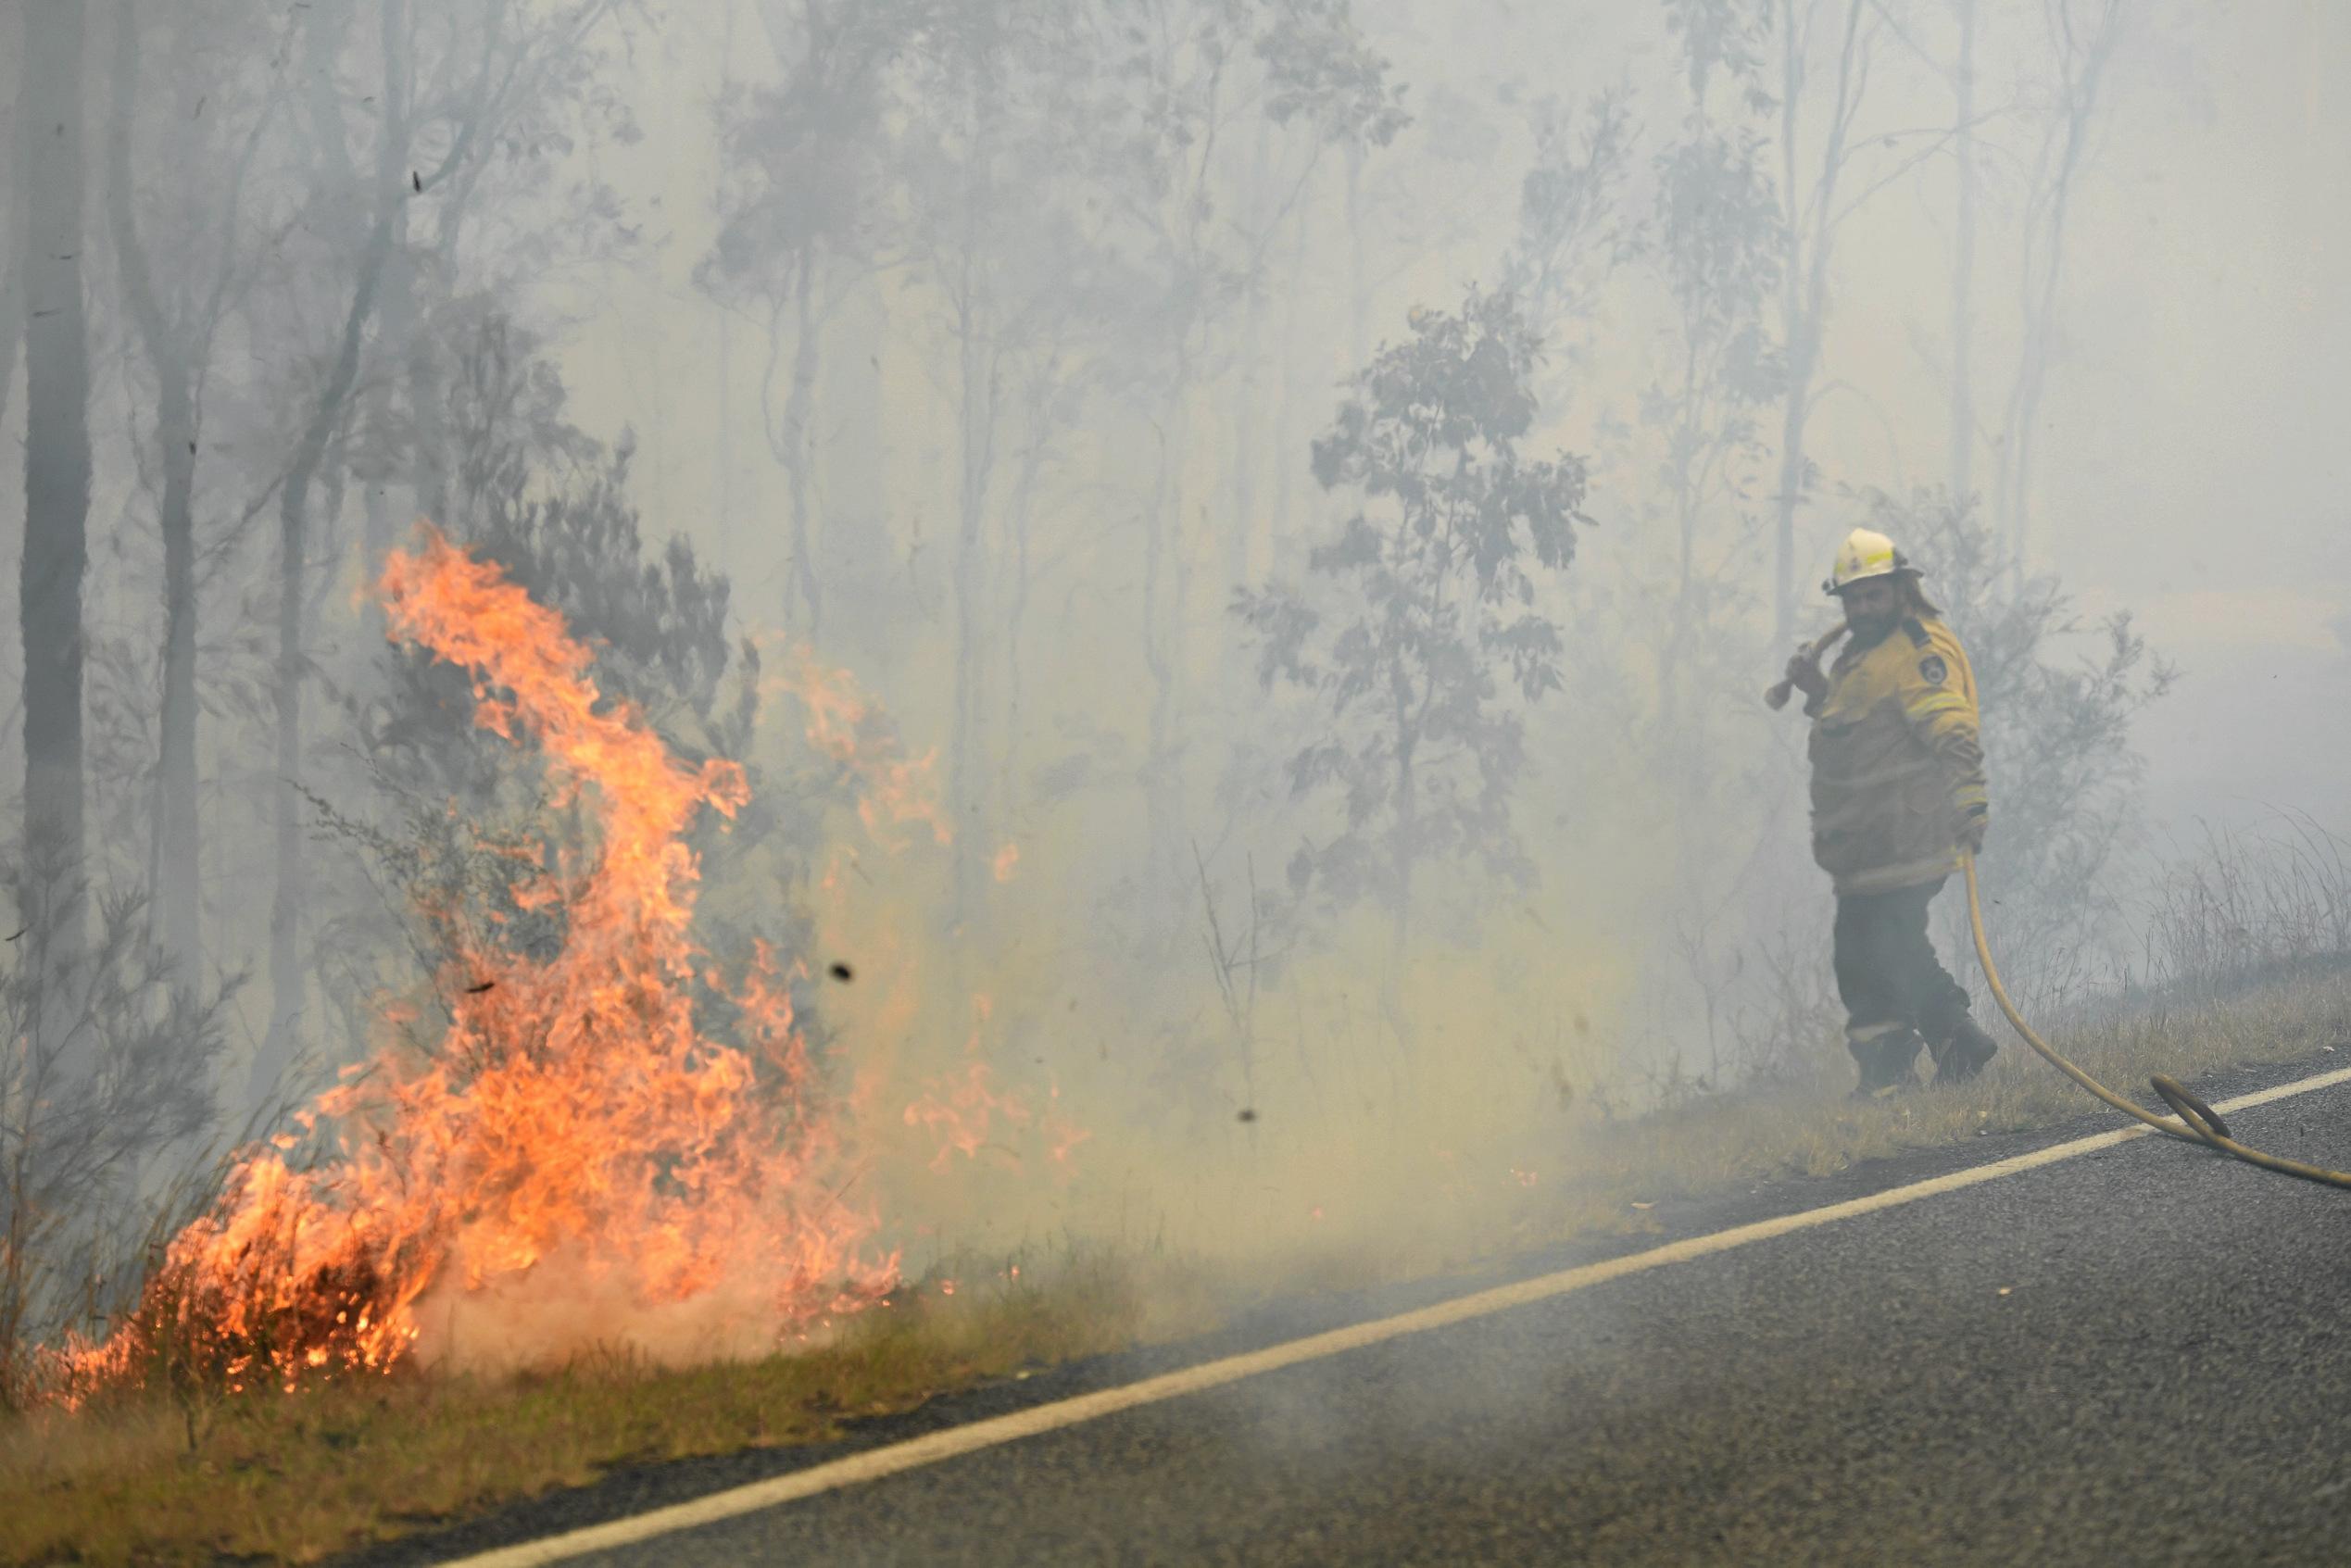 Lightning strikes could start fresh fires, RFS warns | Daily Telegraph